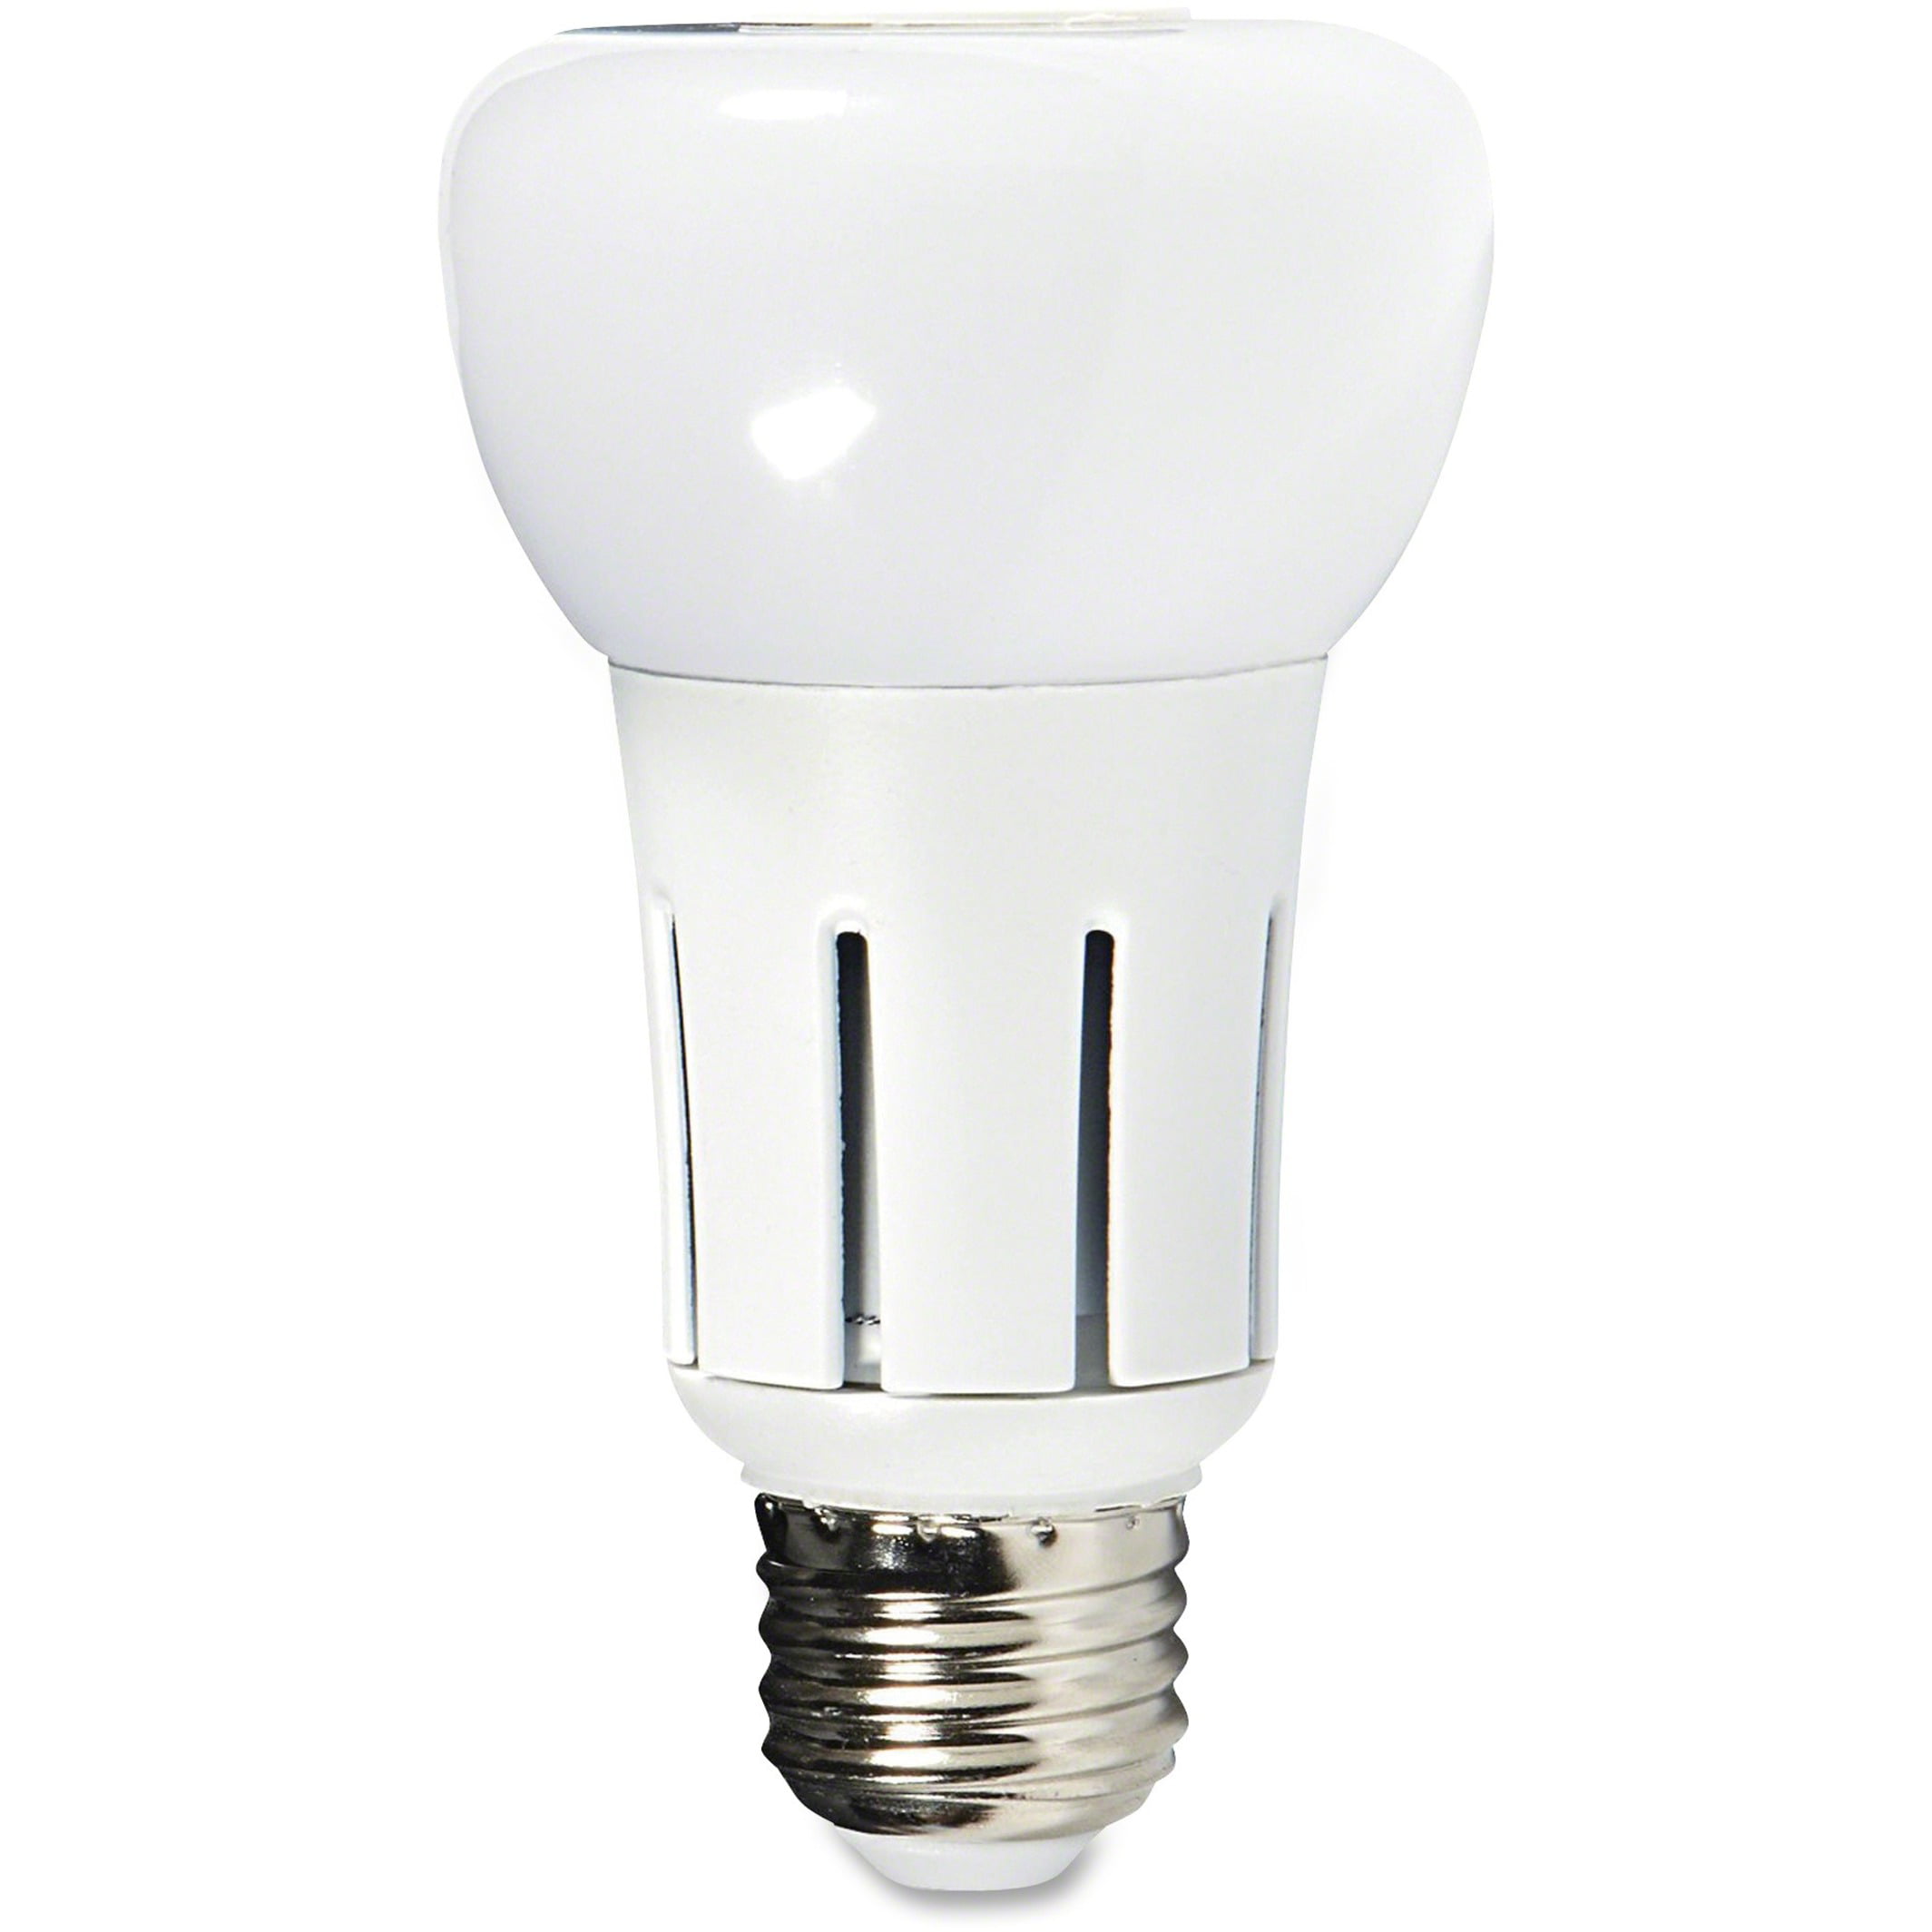 Onbepaald belediging Hassy Verbatim A19 LED Lamp Omni 3000K ENERGY STAR - Walmart.com